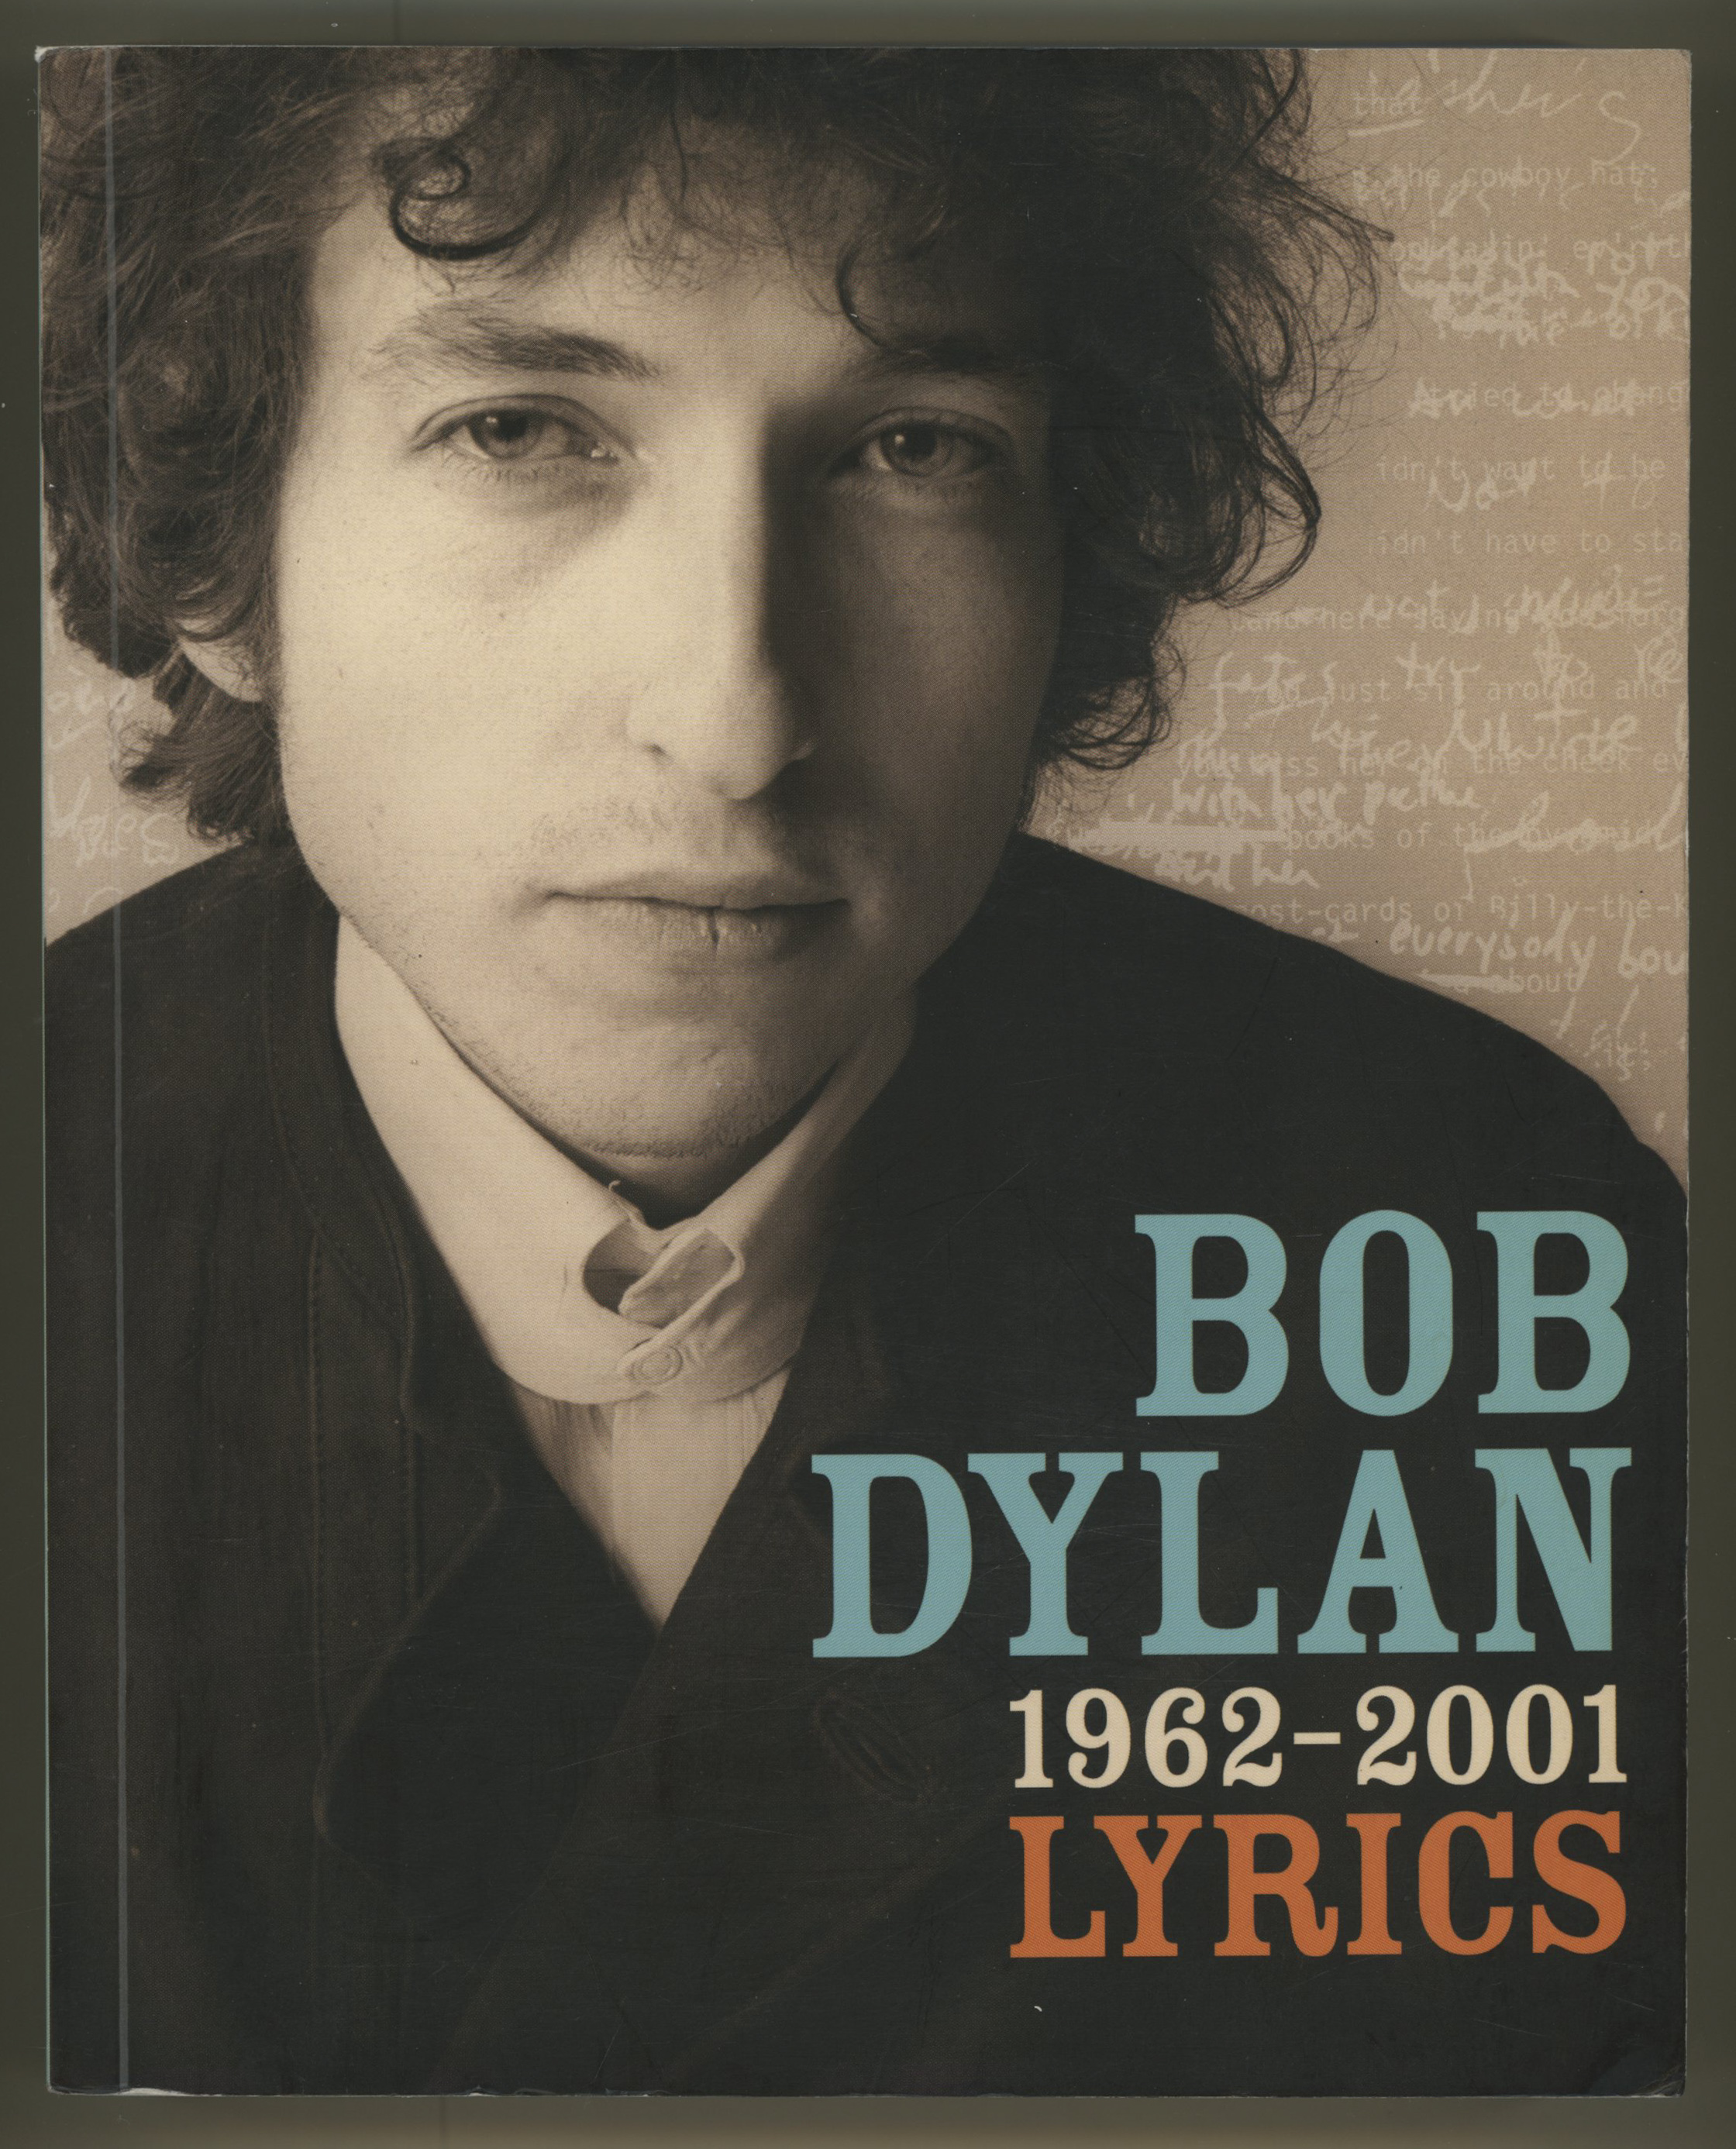 Lyrics 1962-2001 - Bob Dylan